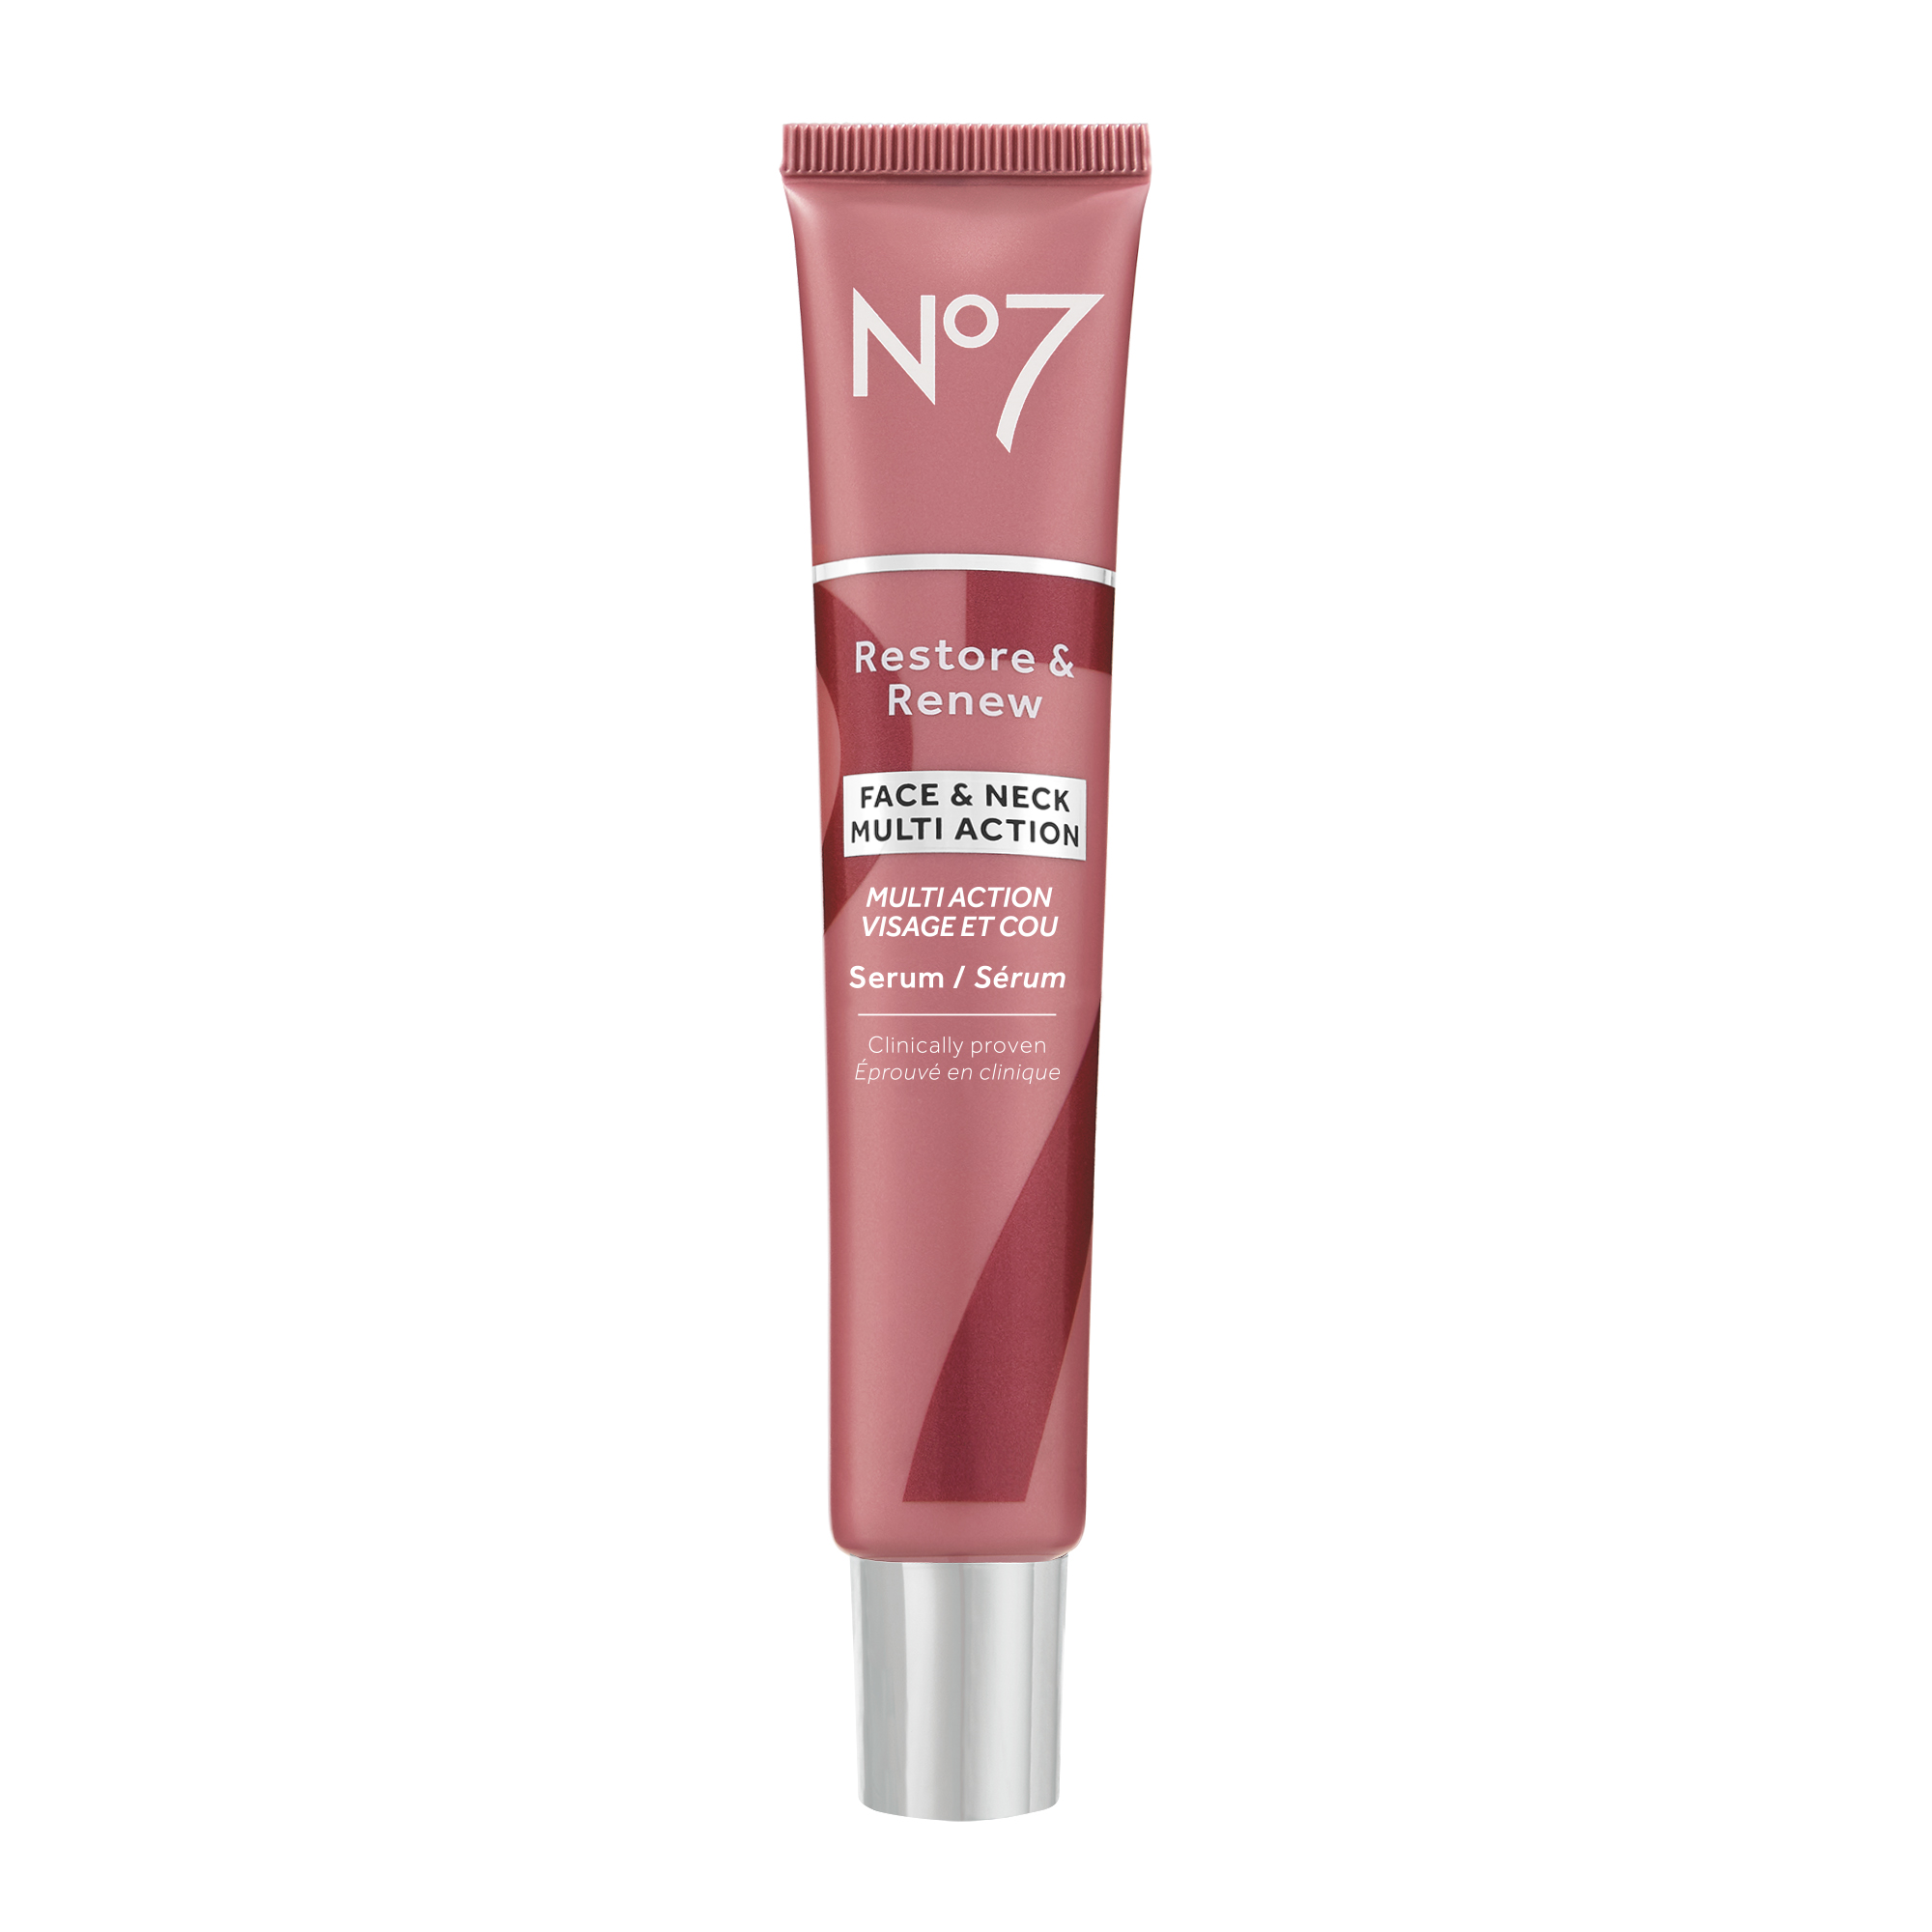 No7 Restore & Renew Multi Action Anti-Aging Face & Neck Serum, 1.69 fl oz - image 1 of 9